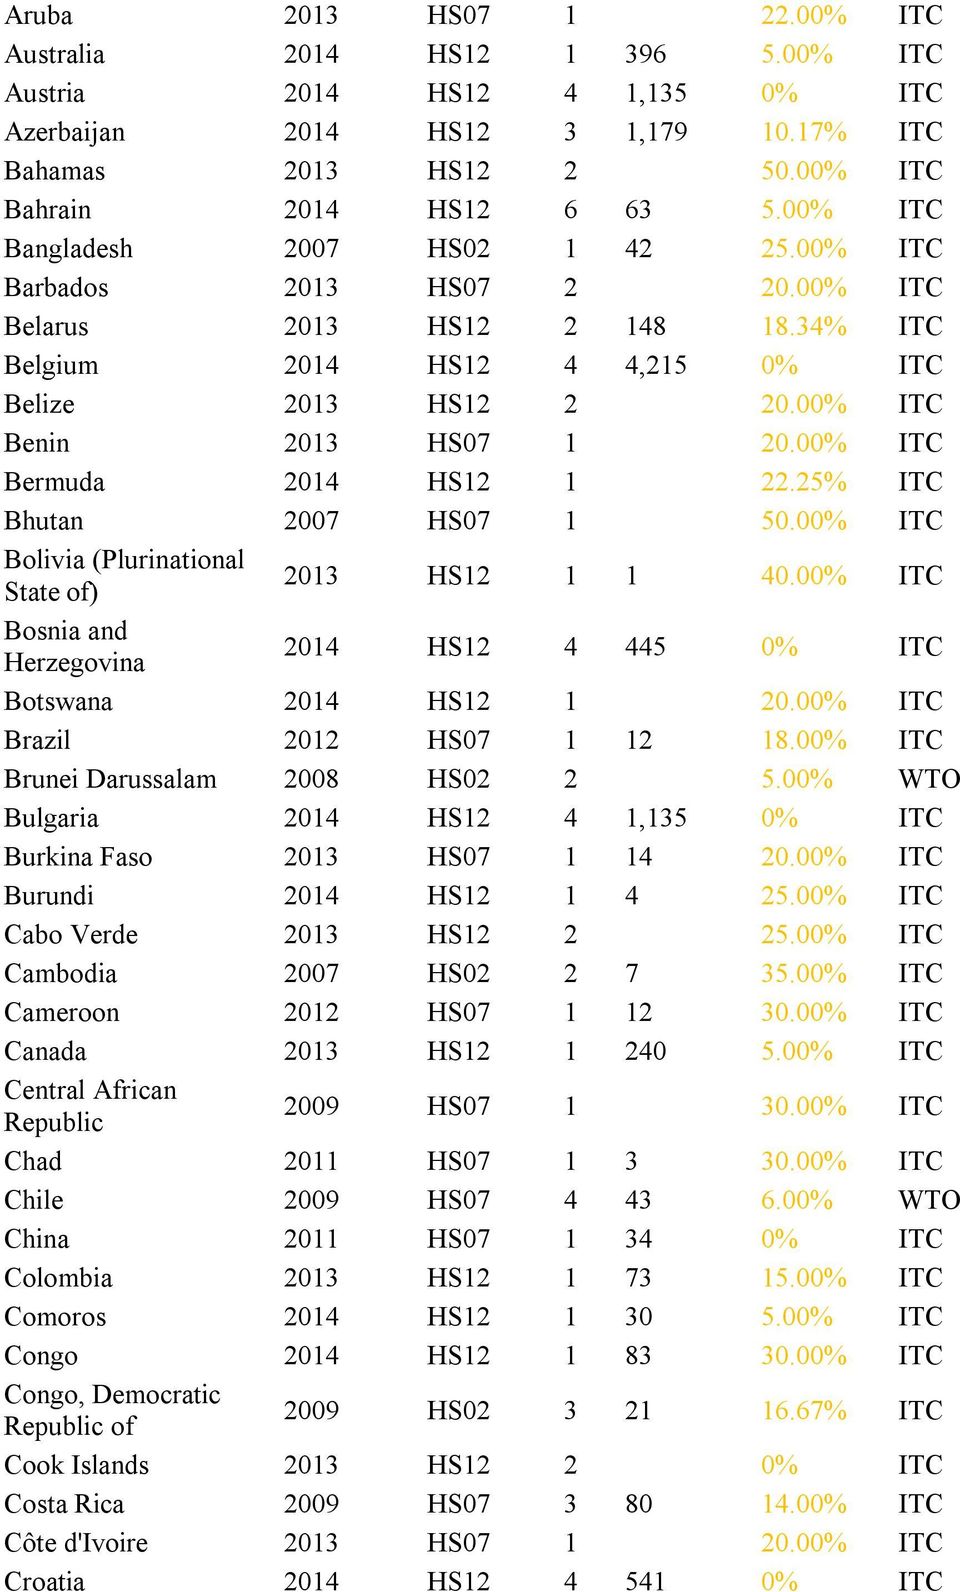 00% ITC Bermuda 2014 HS12 1 22.25% ITC Bhutan 2007 HS07 1 50.00% ITC Bolivia (Plurinational State of) 2013 HS12 1 1 40.00% ITC Bosnia and Herzegovina 2014 HS12 4 445 0% ITC Botswana 2014 HS12 1 20.